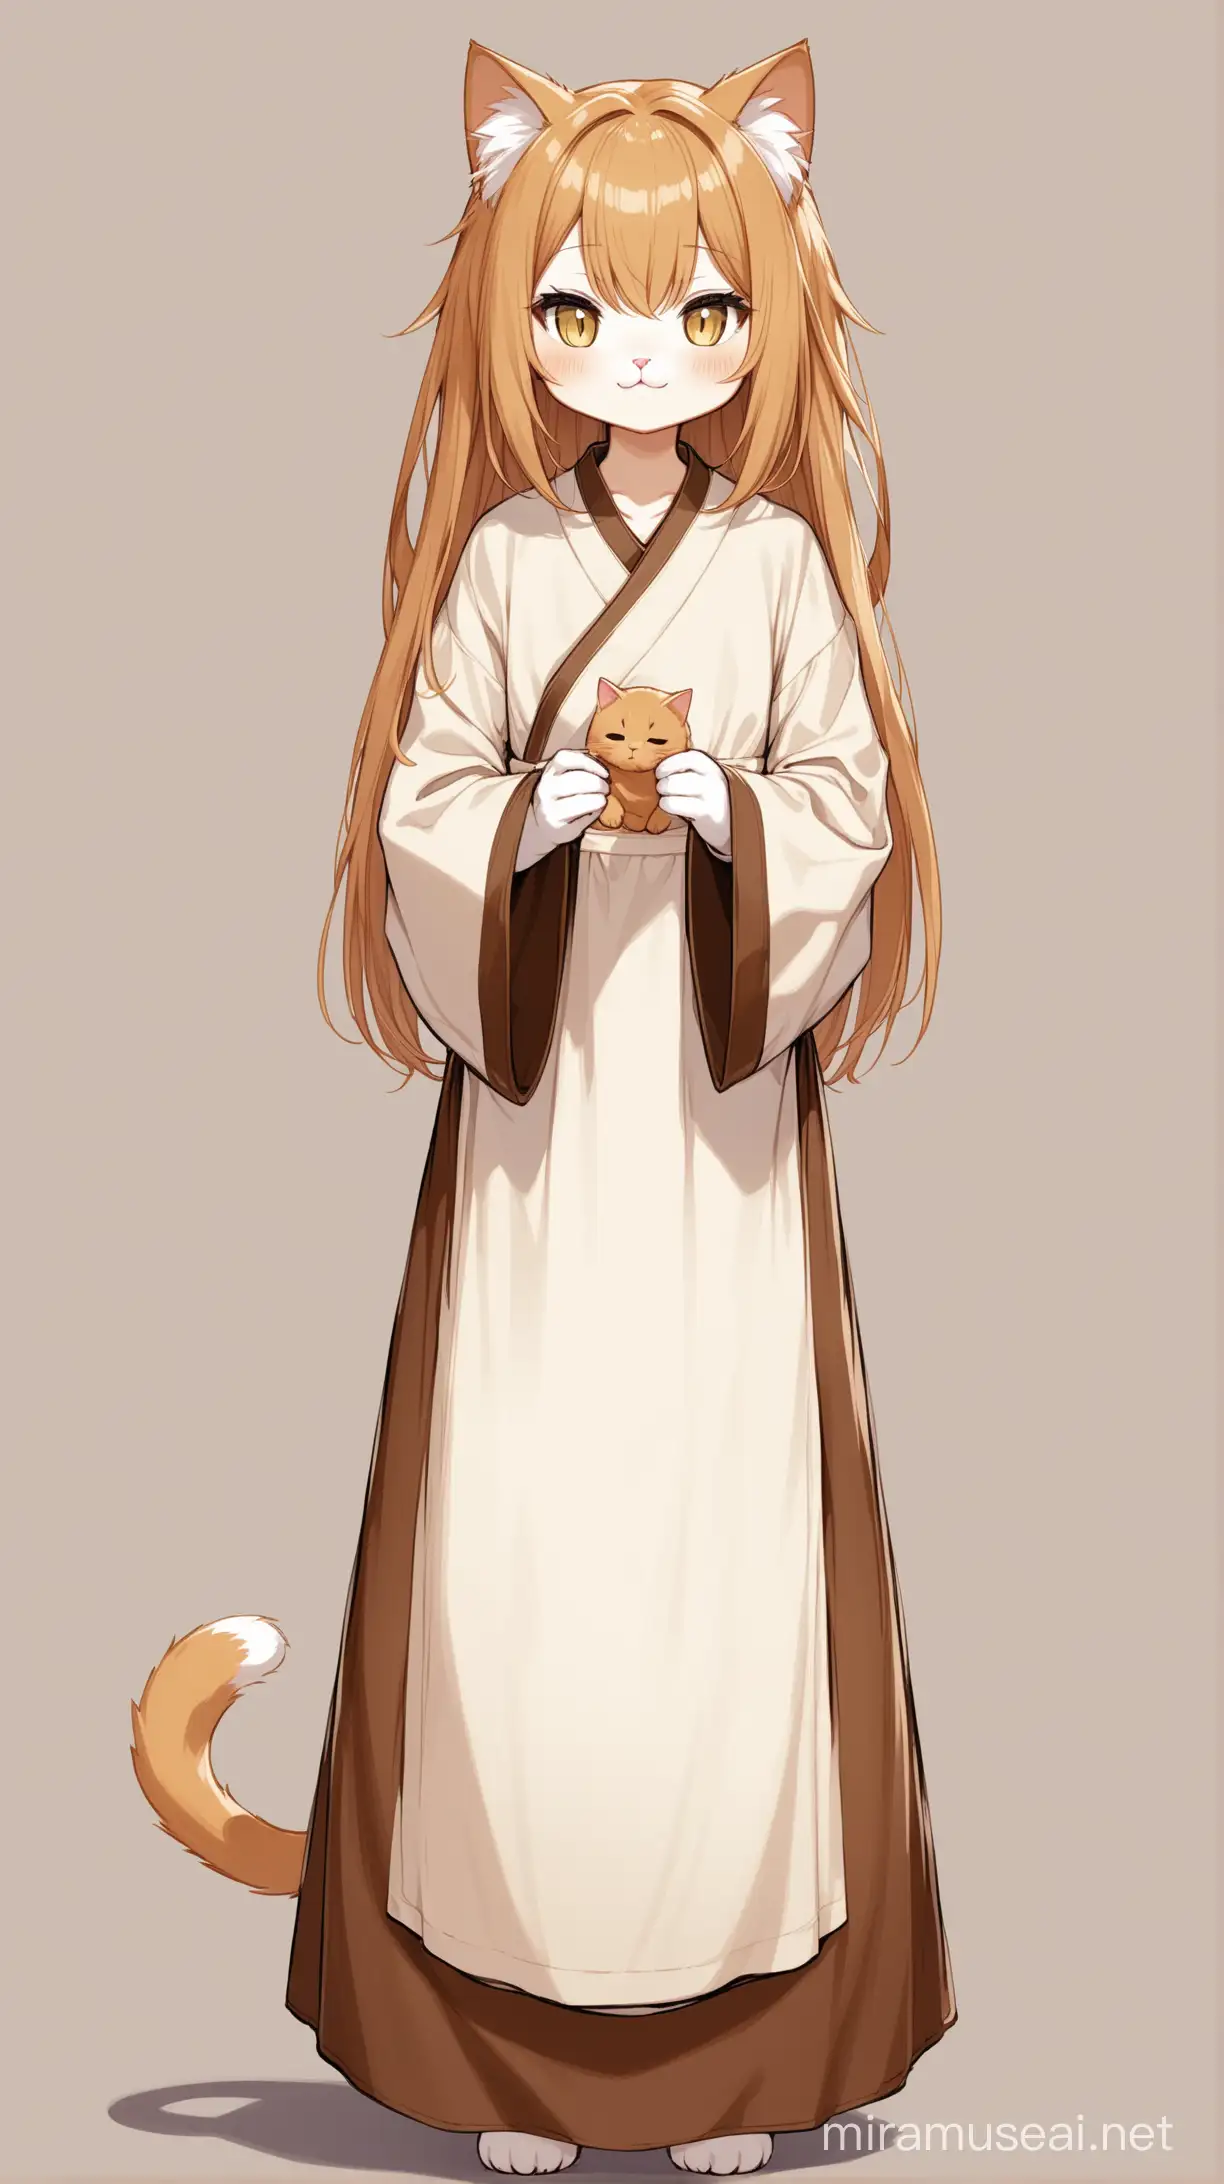 Feline humanoid in elegant attire with almond hair